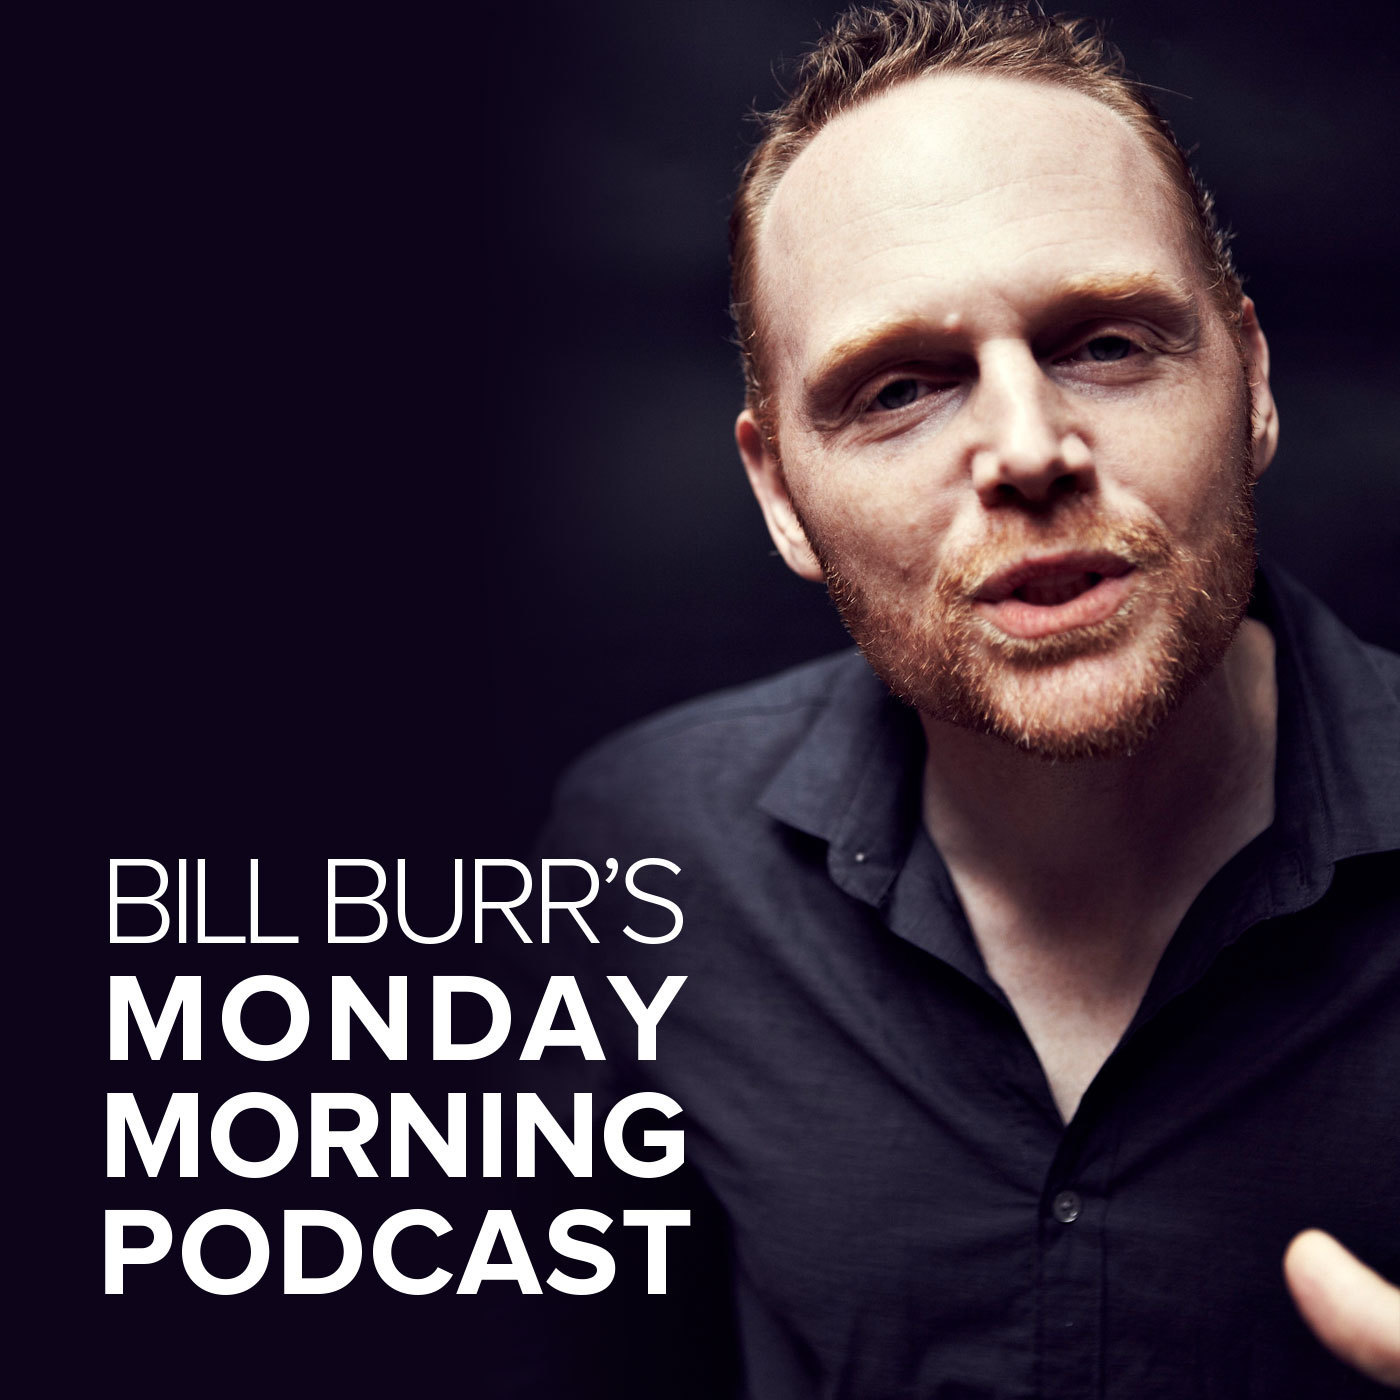 Monday Morning Podcast 12-29-14